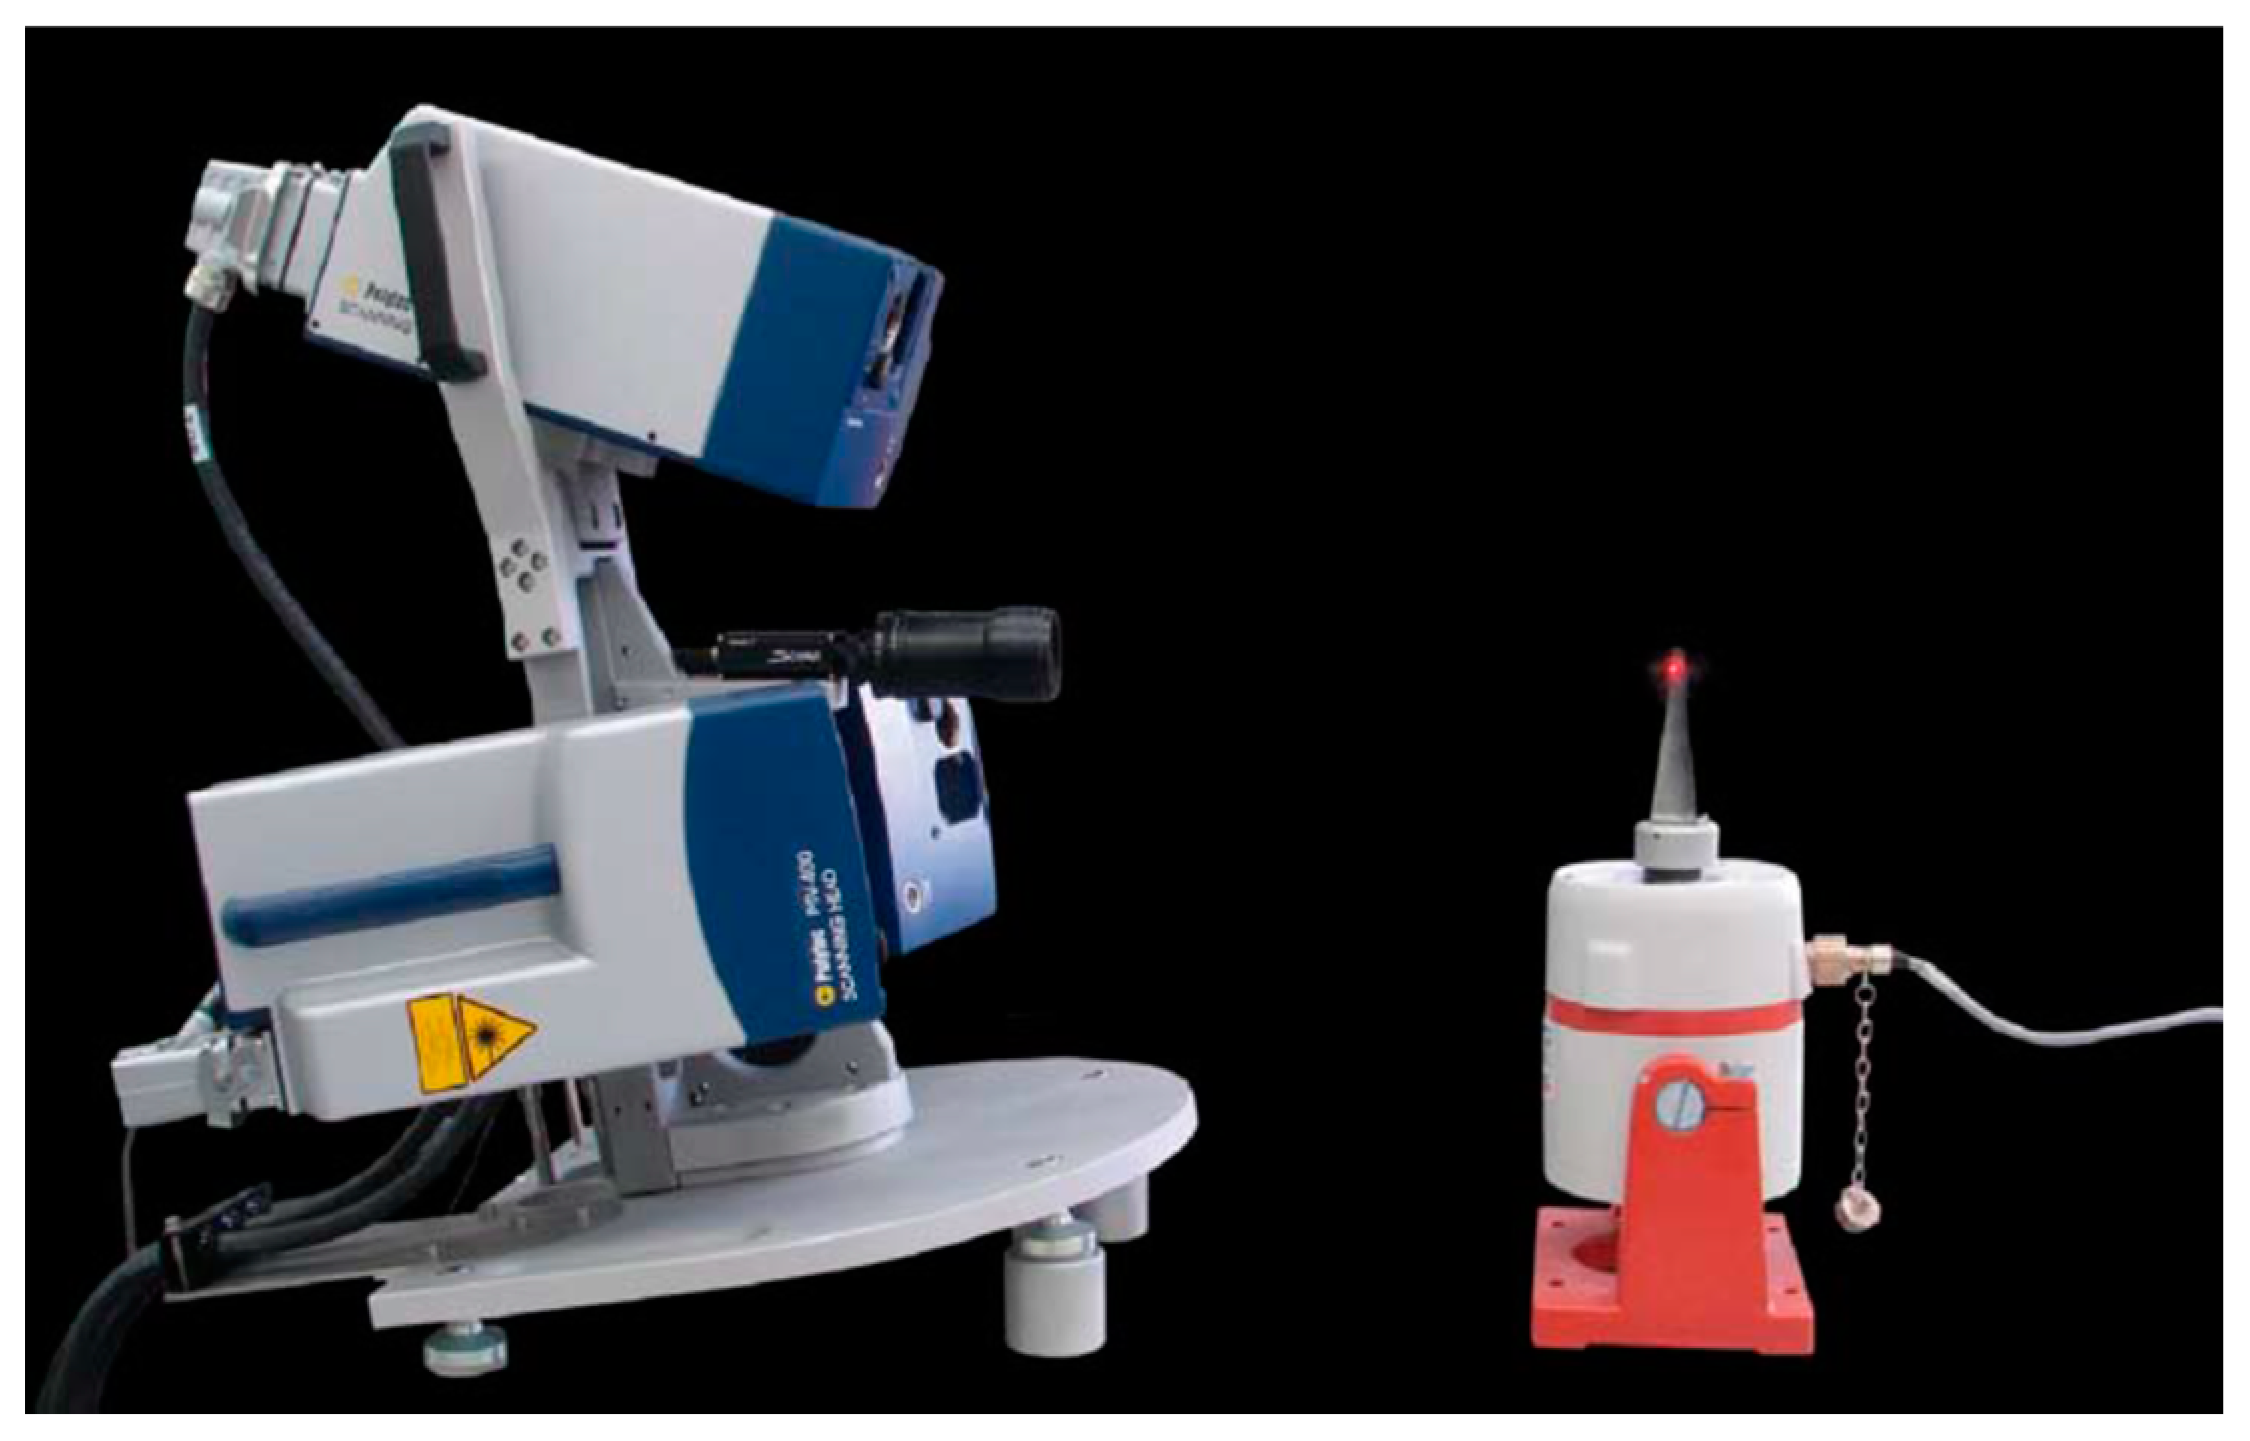 Sintron] Mini Industrial Robotic Arm Kit, Mechanic Arm & DIY Robot To –  Sintron Technology